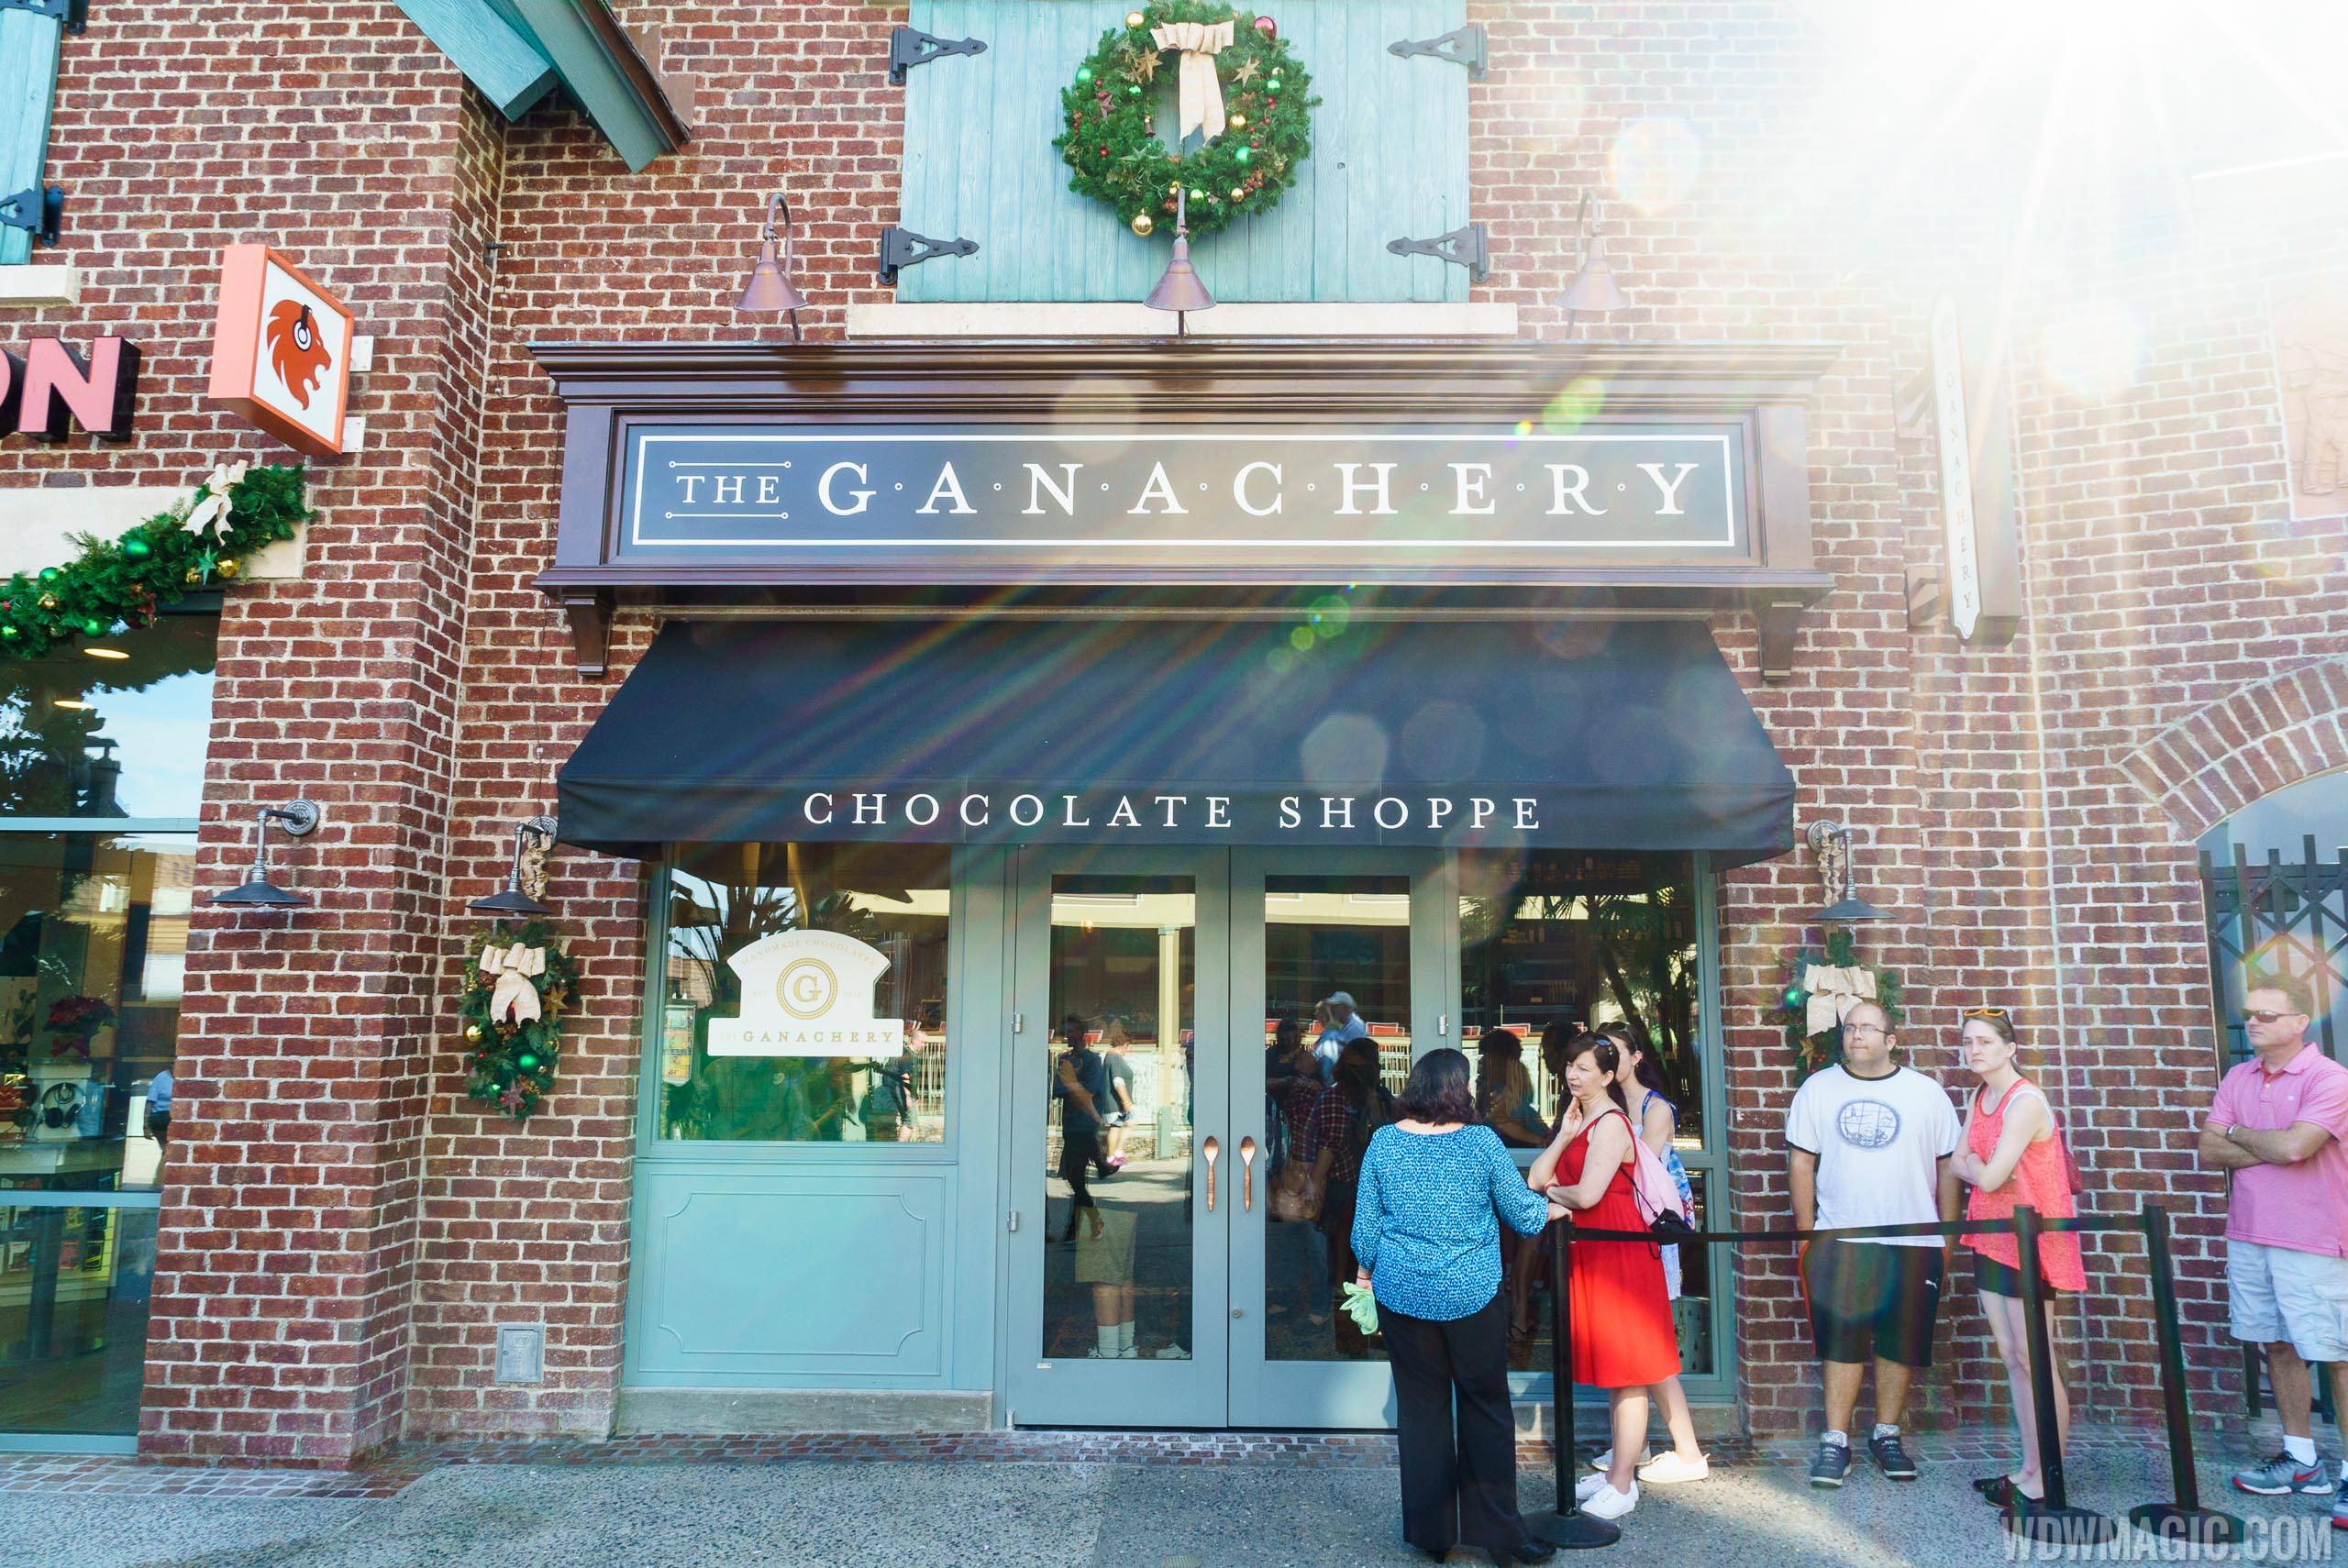 PHOTOS - The Ganachery brings high-end chocolate to Disney Springs